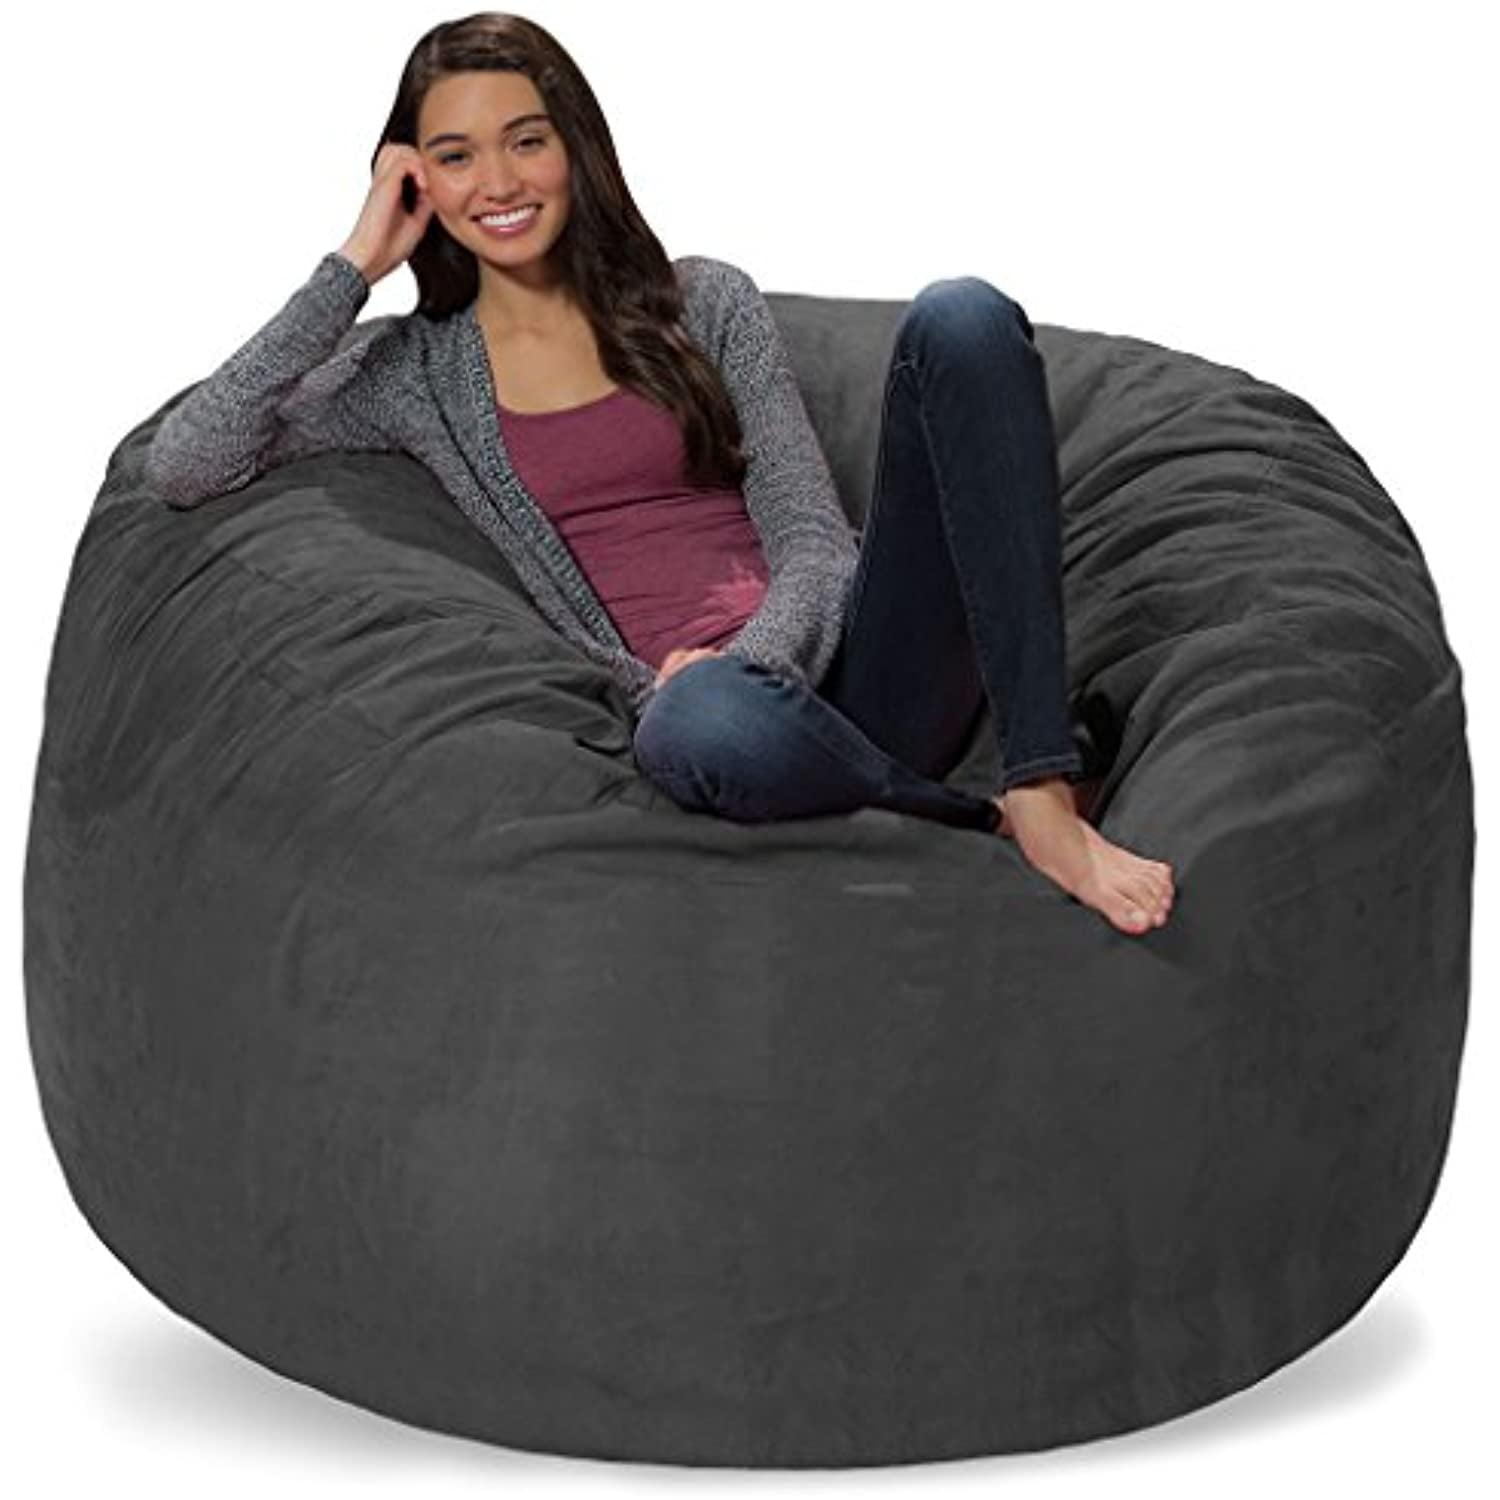 Comfy Sacks 5 ft Memory Foam Bean Bag Chair, Charcoal Micro Suede.